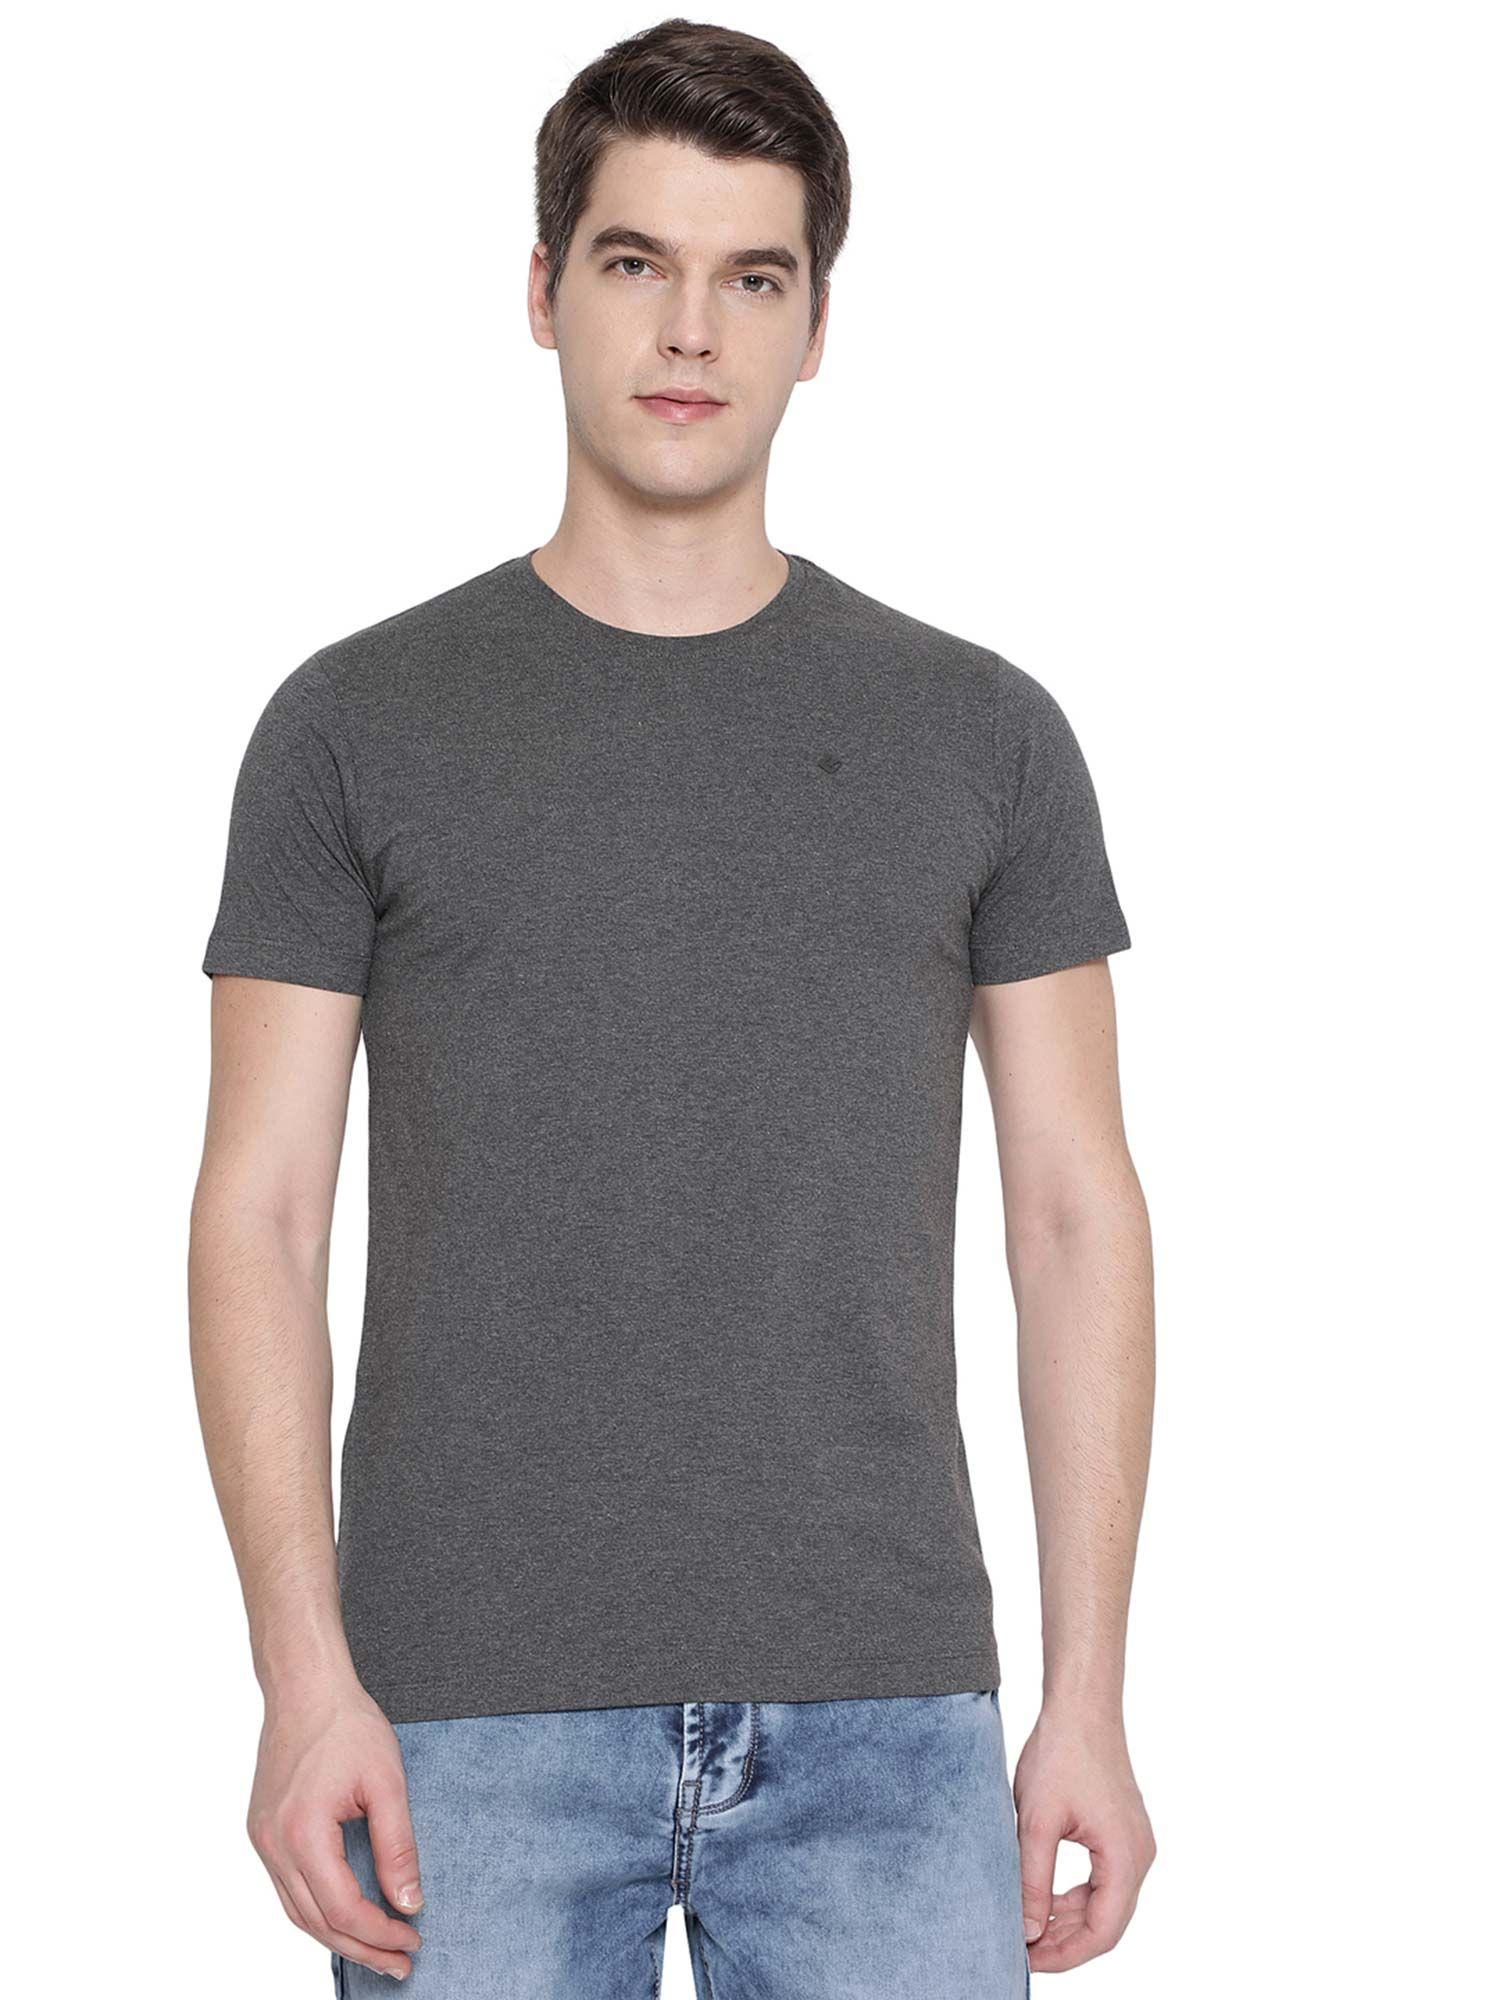 mens charcoal grey cotton blend slim fit solid t-shirt